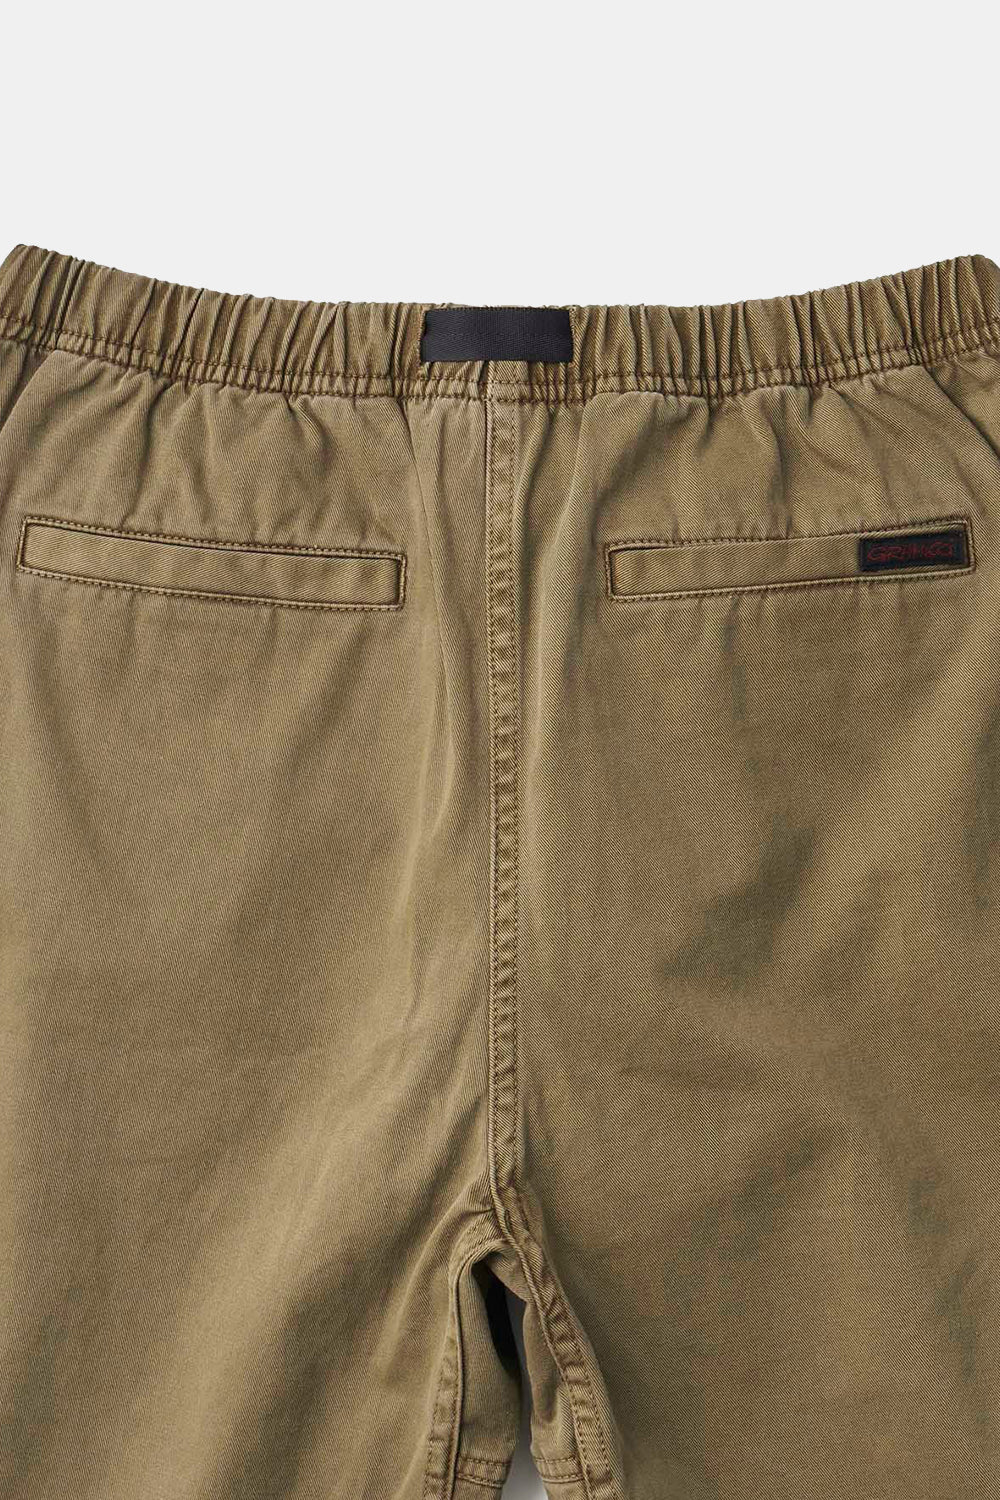 Gramicci G-Shorts Pigment Dye Cotton Twill (Moss)